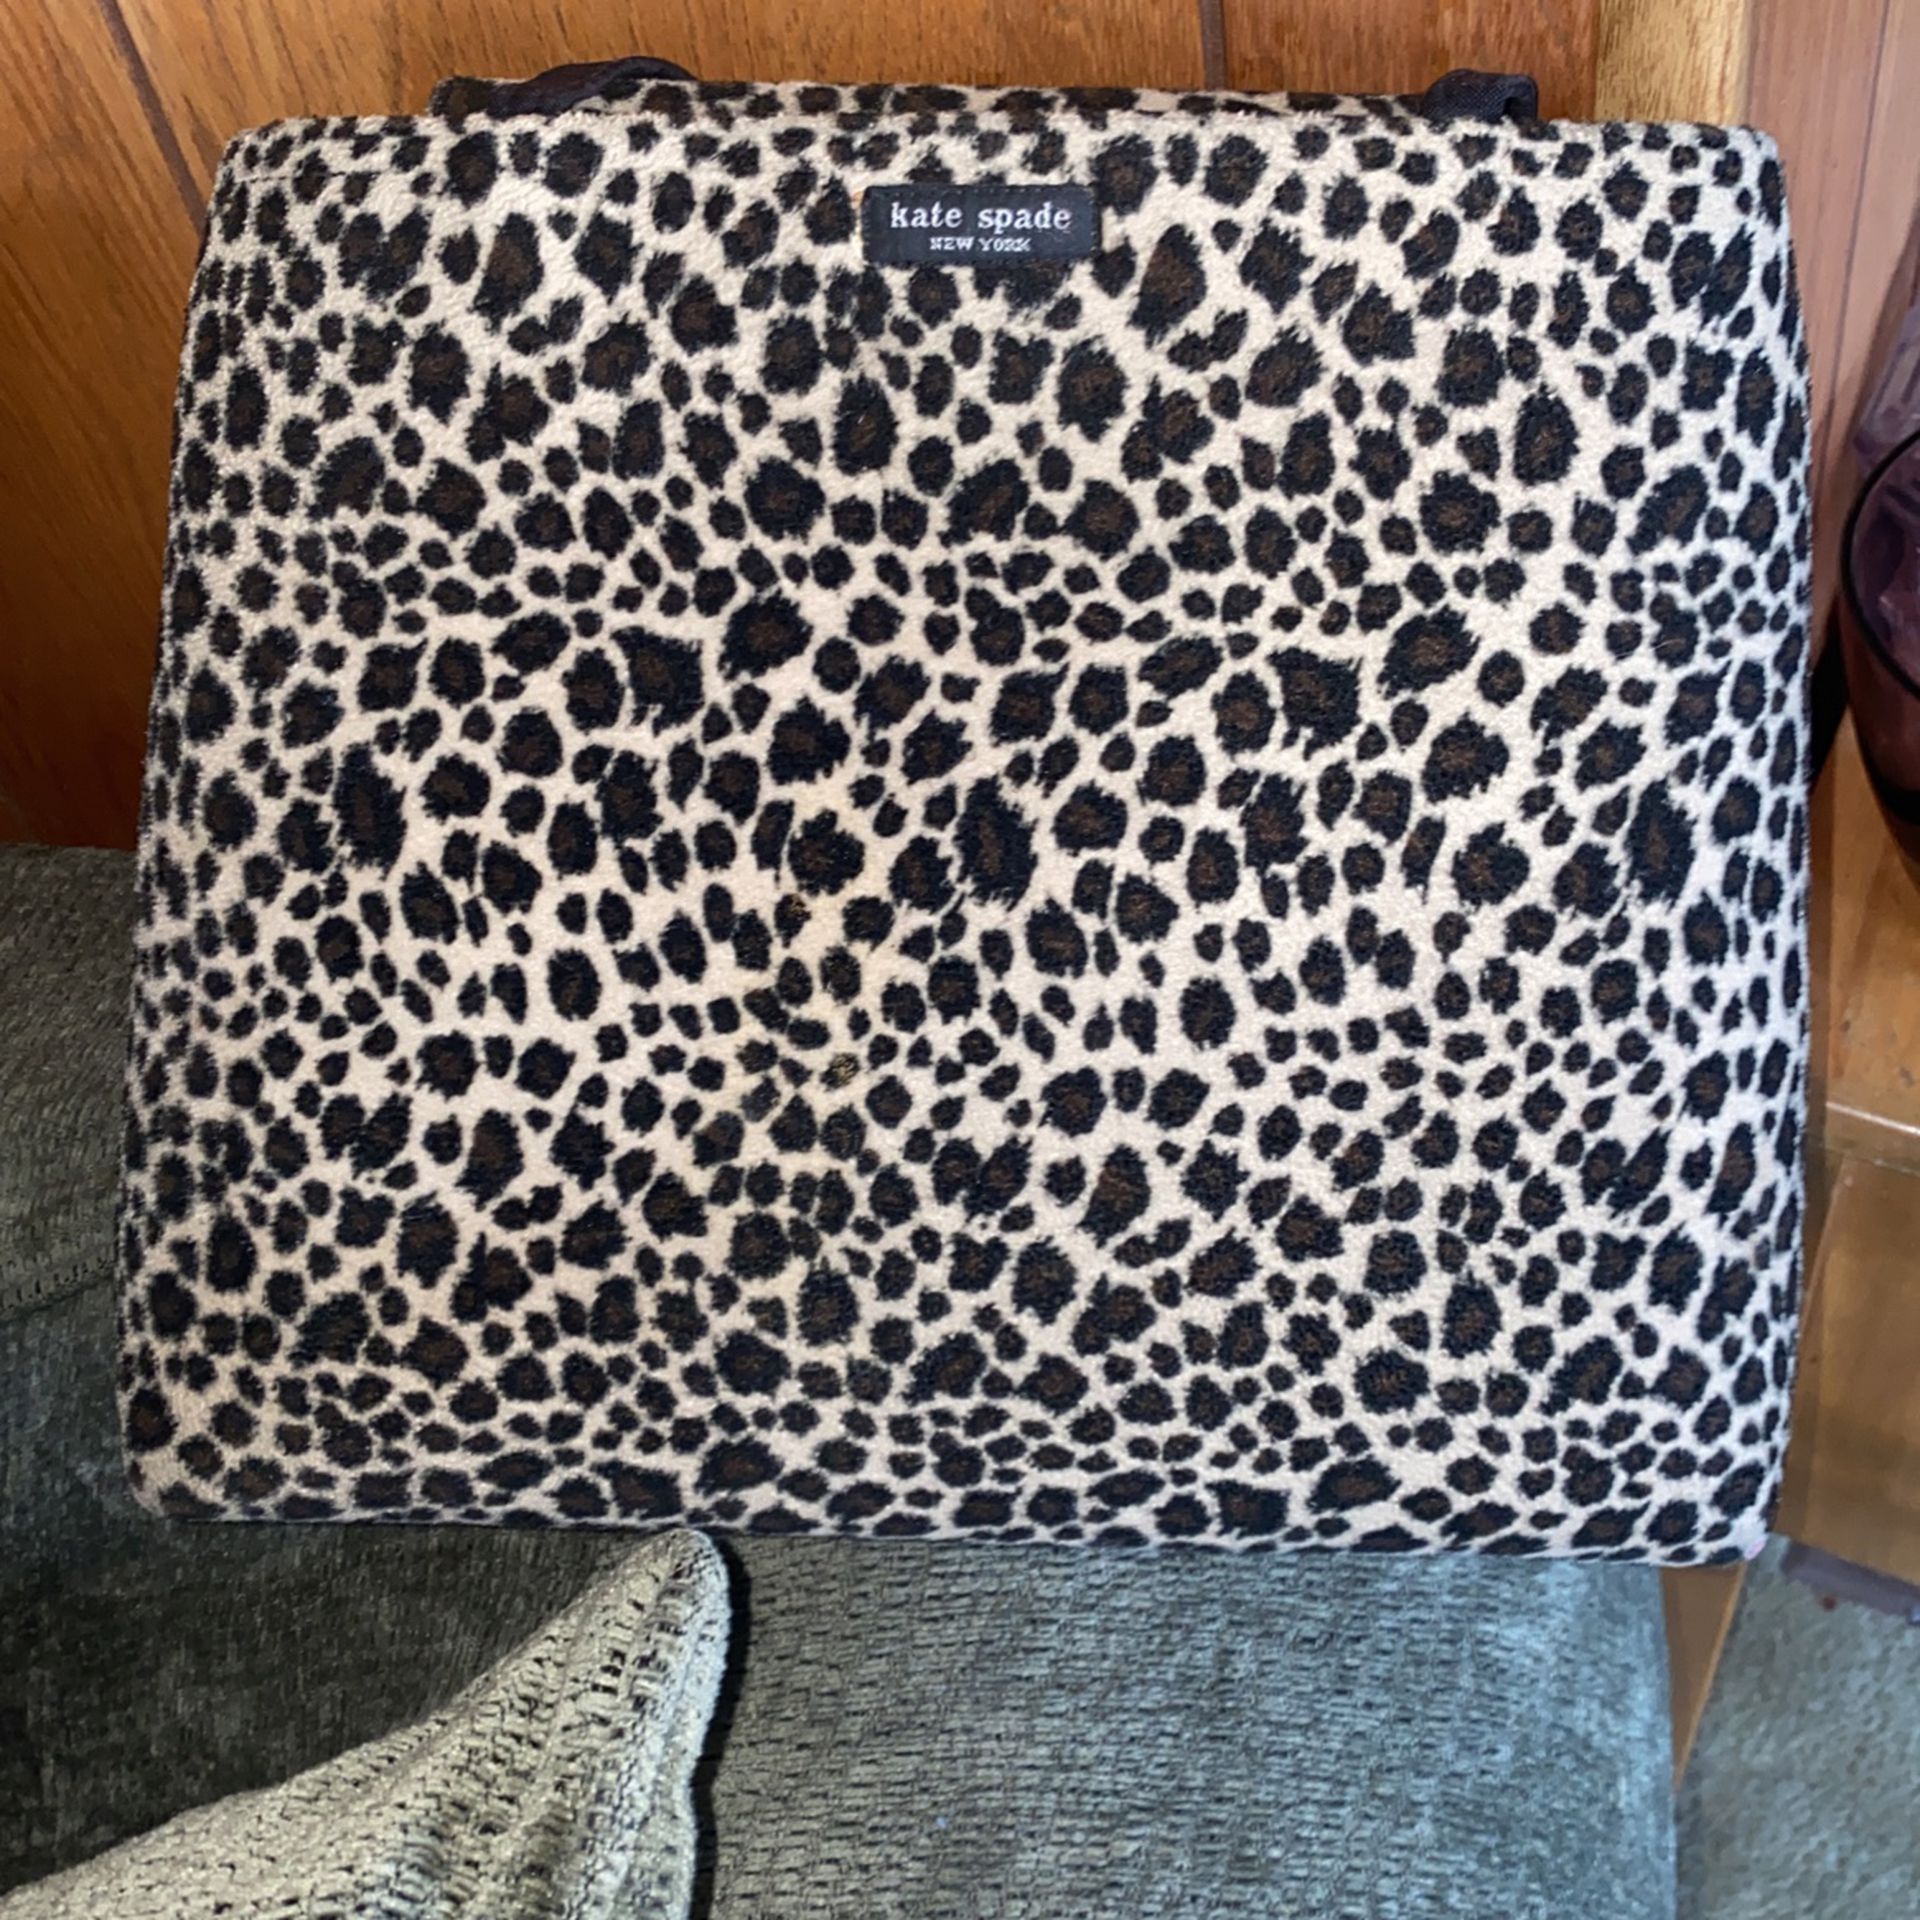 Leopard Kate Spade Tote Bag 